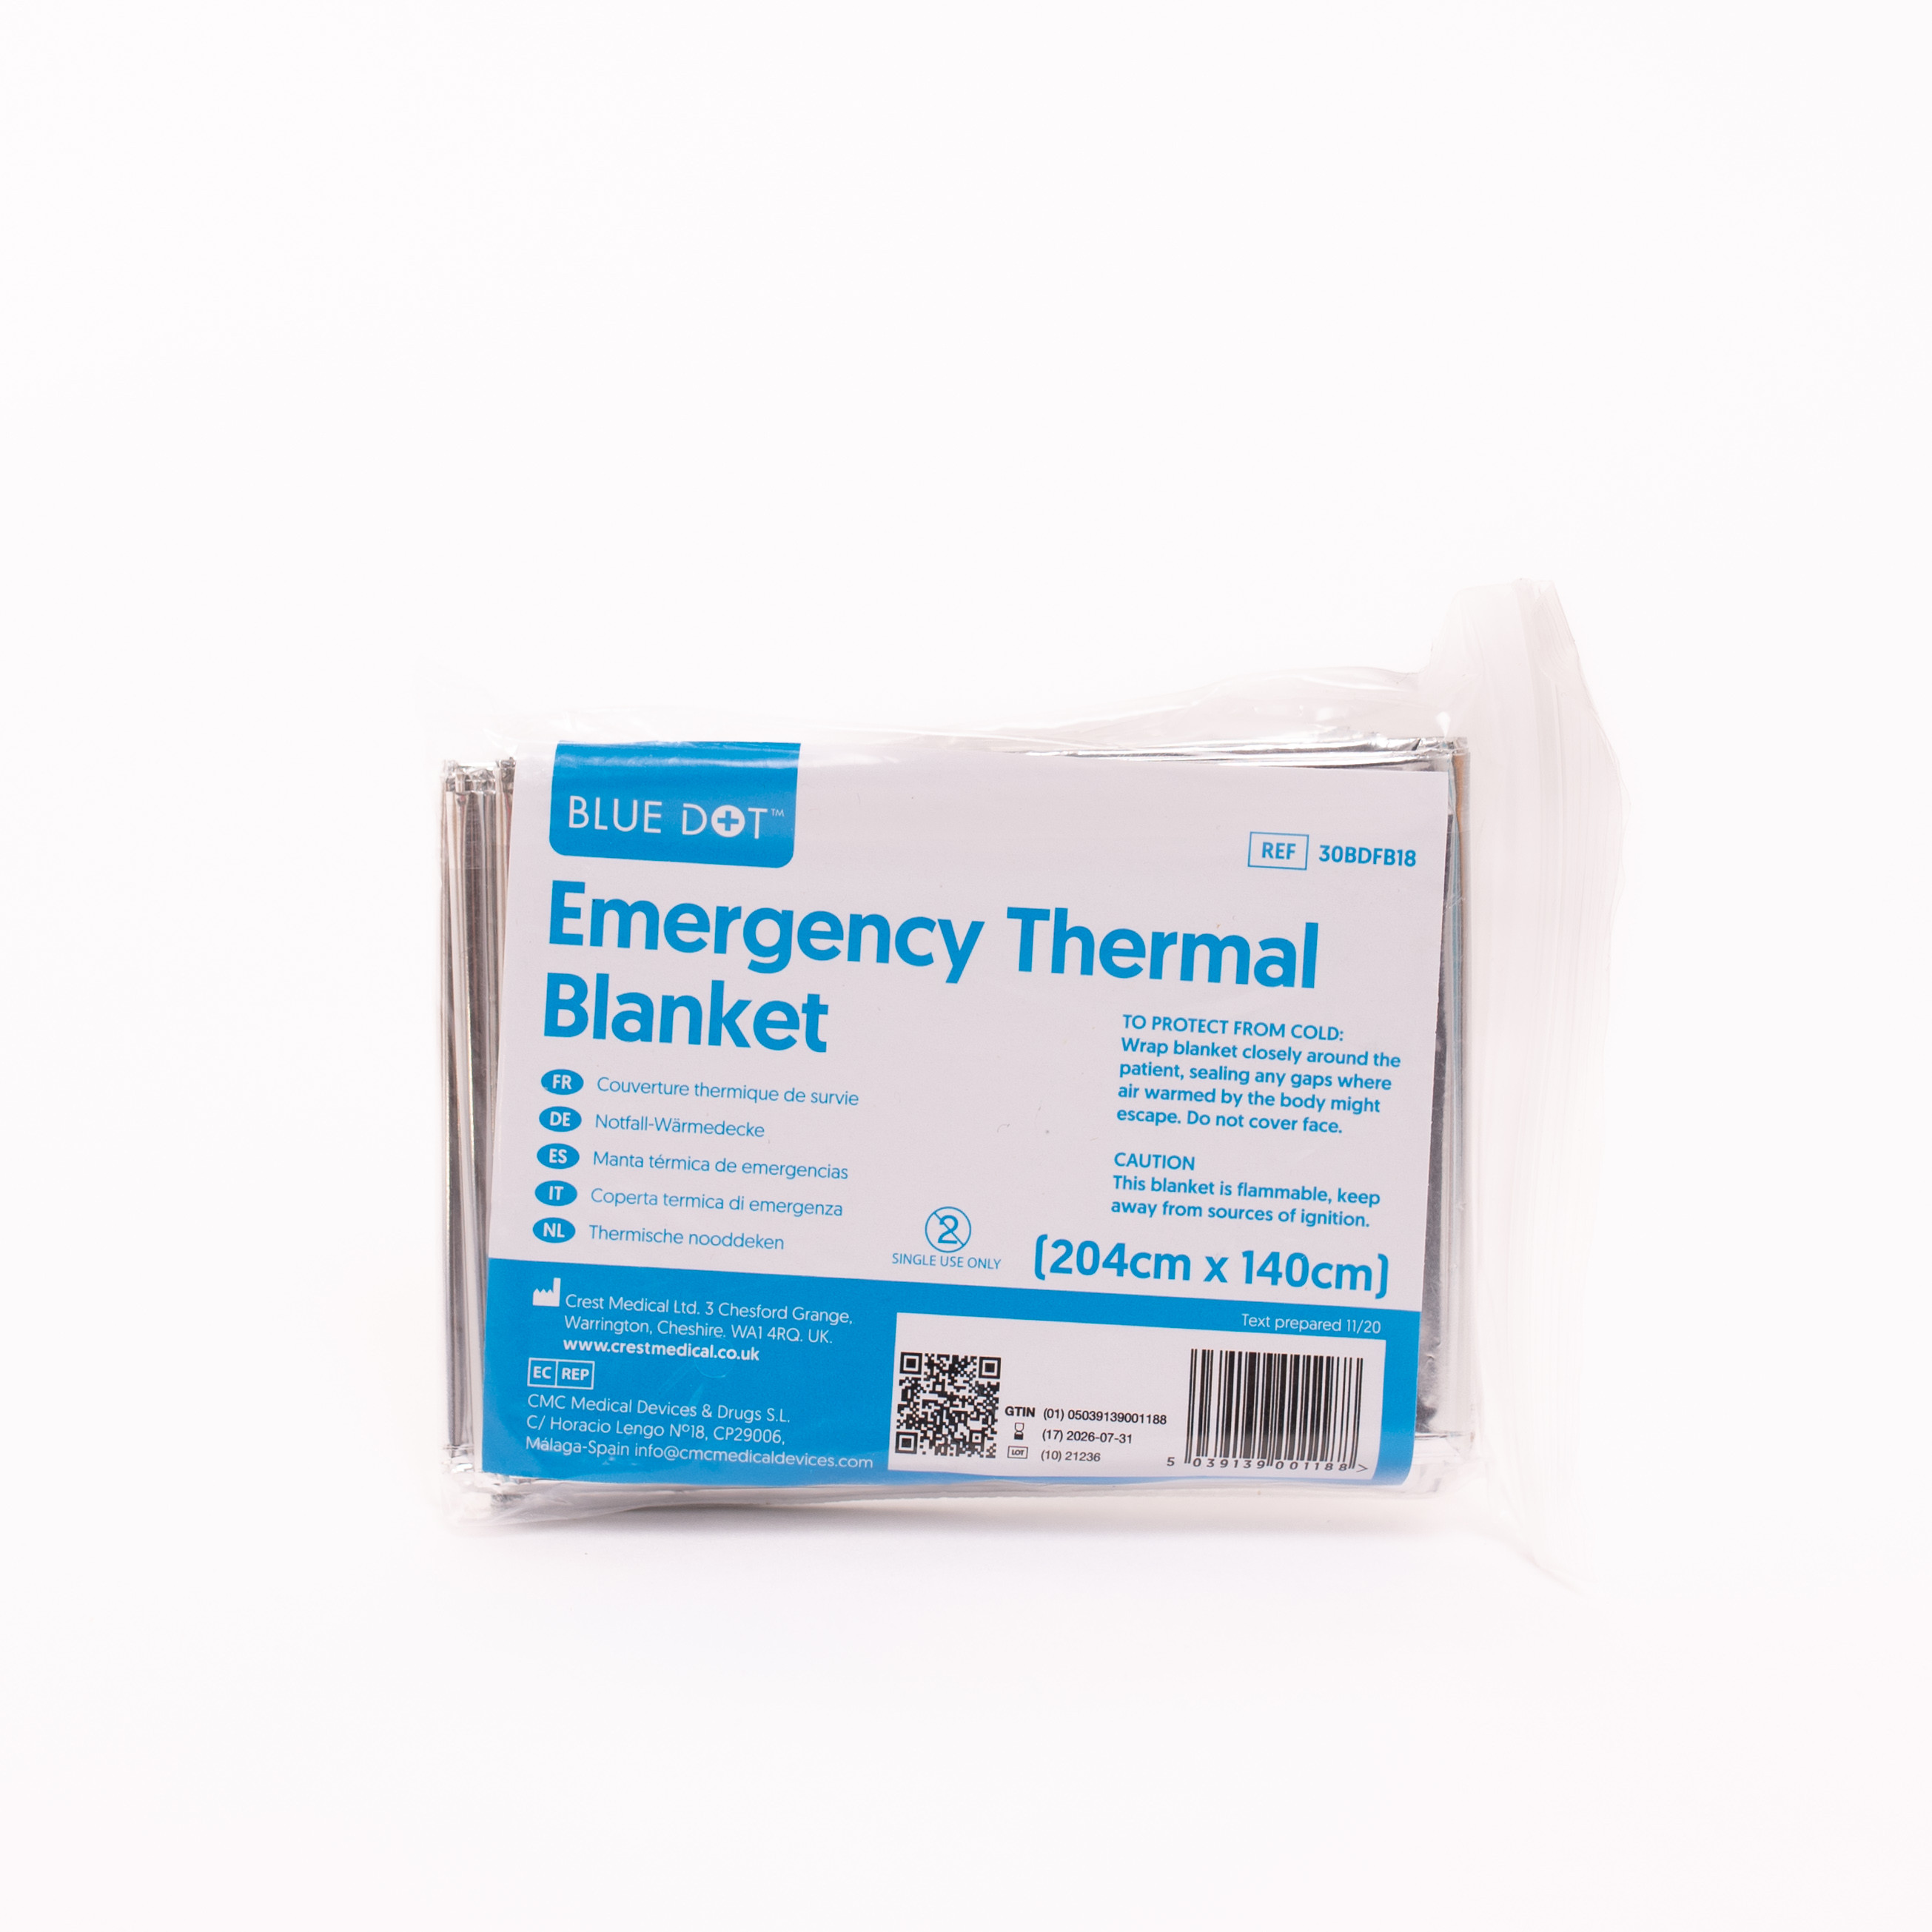 1 x Blue Dot Emergency Thermal  Blanket 204cm x 140cm 